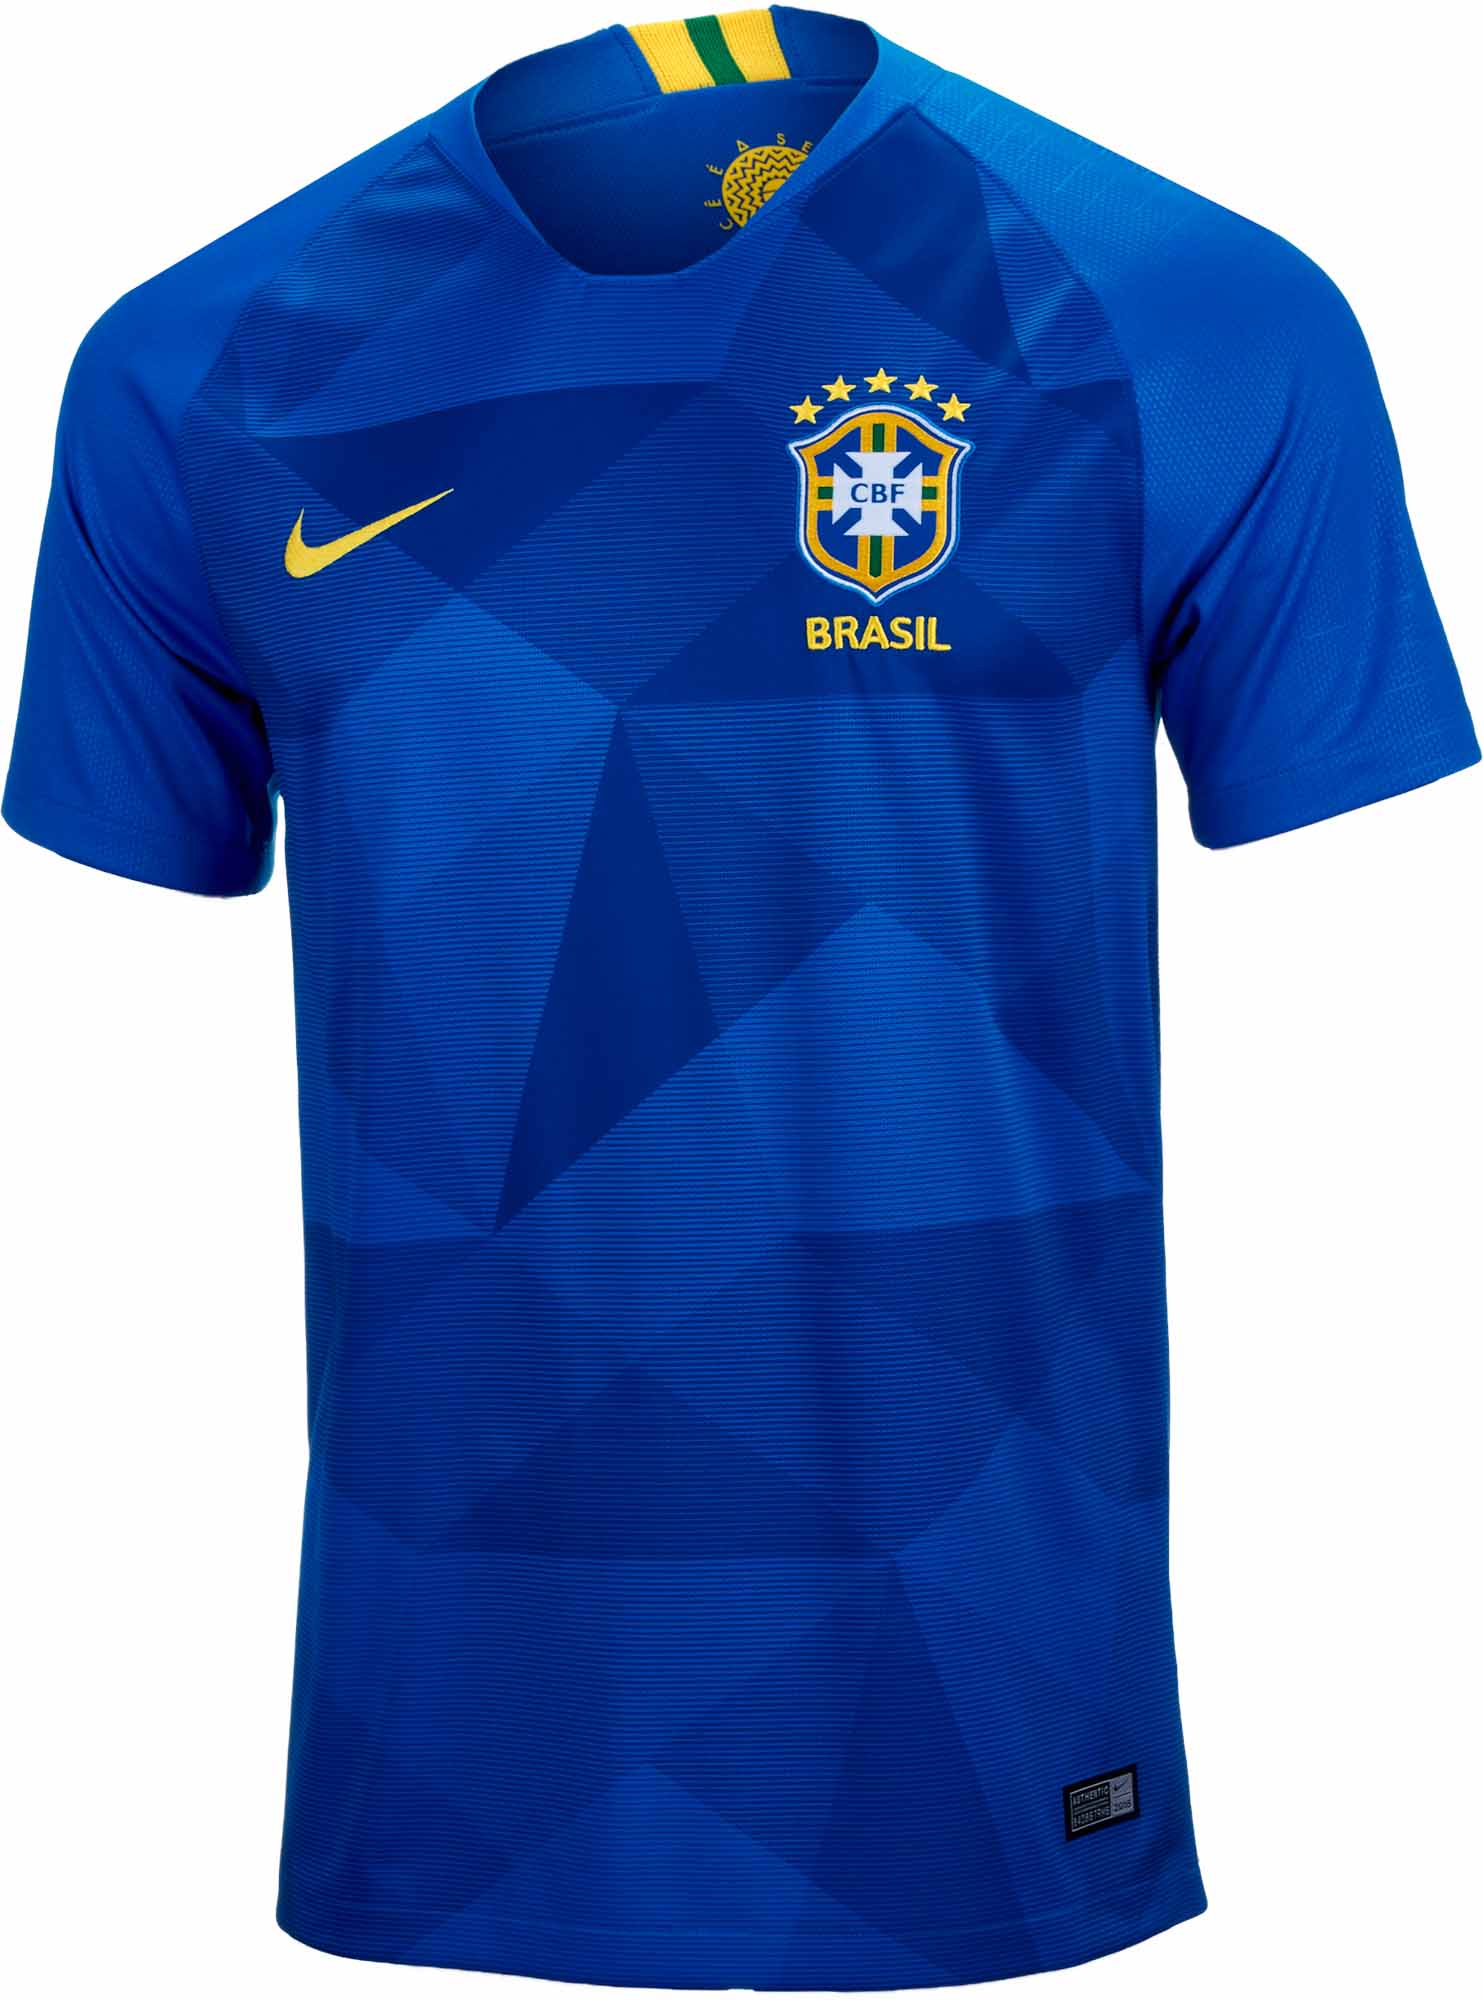 Brazil Away Kit 2018 World Cup Fifa